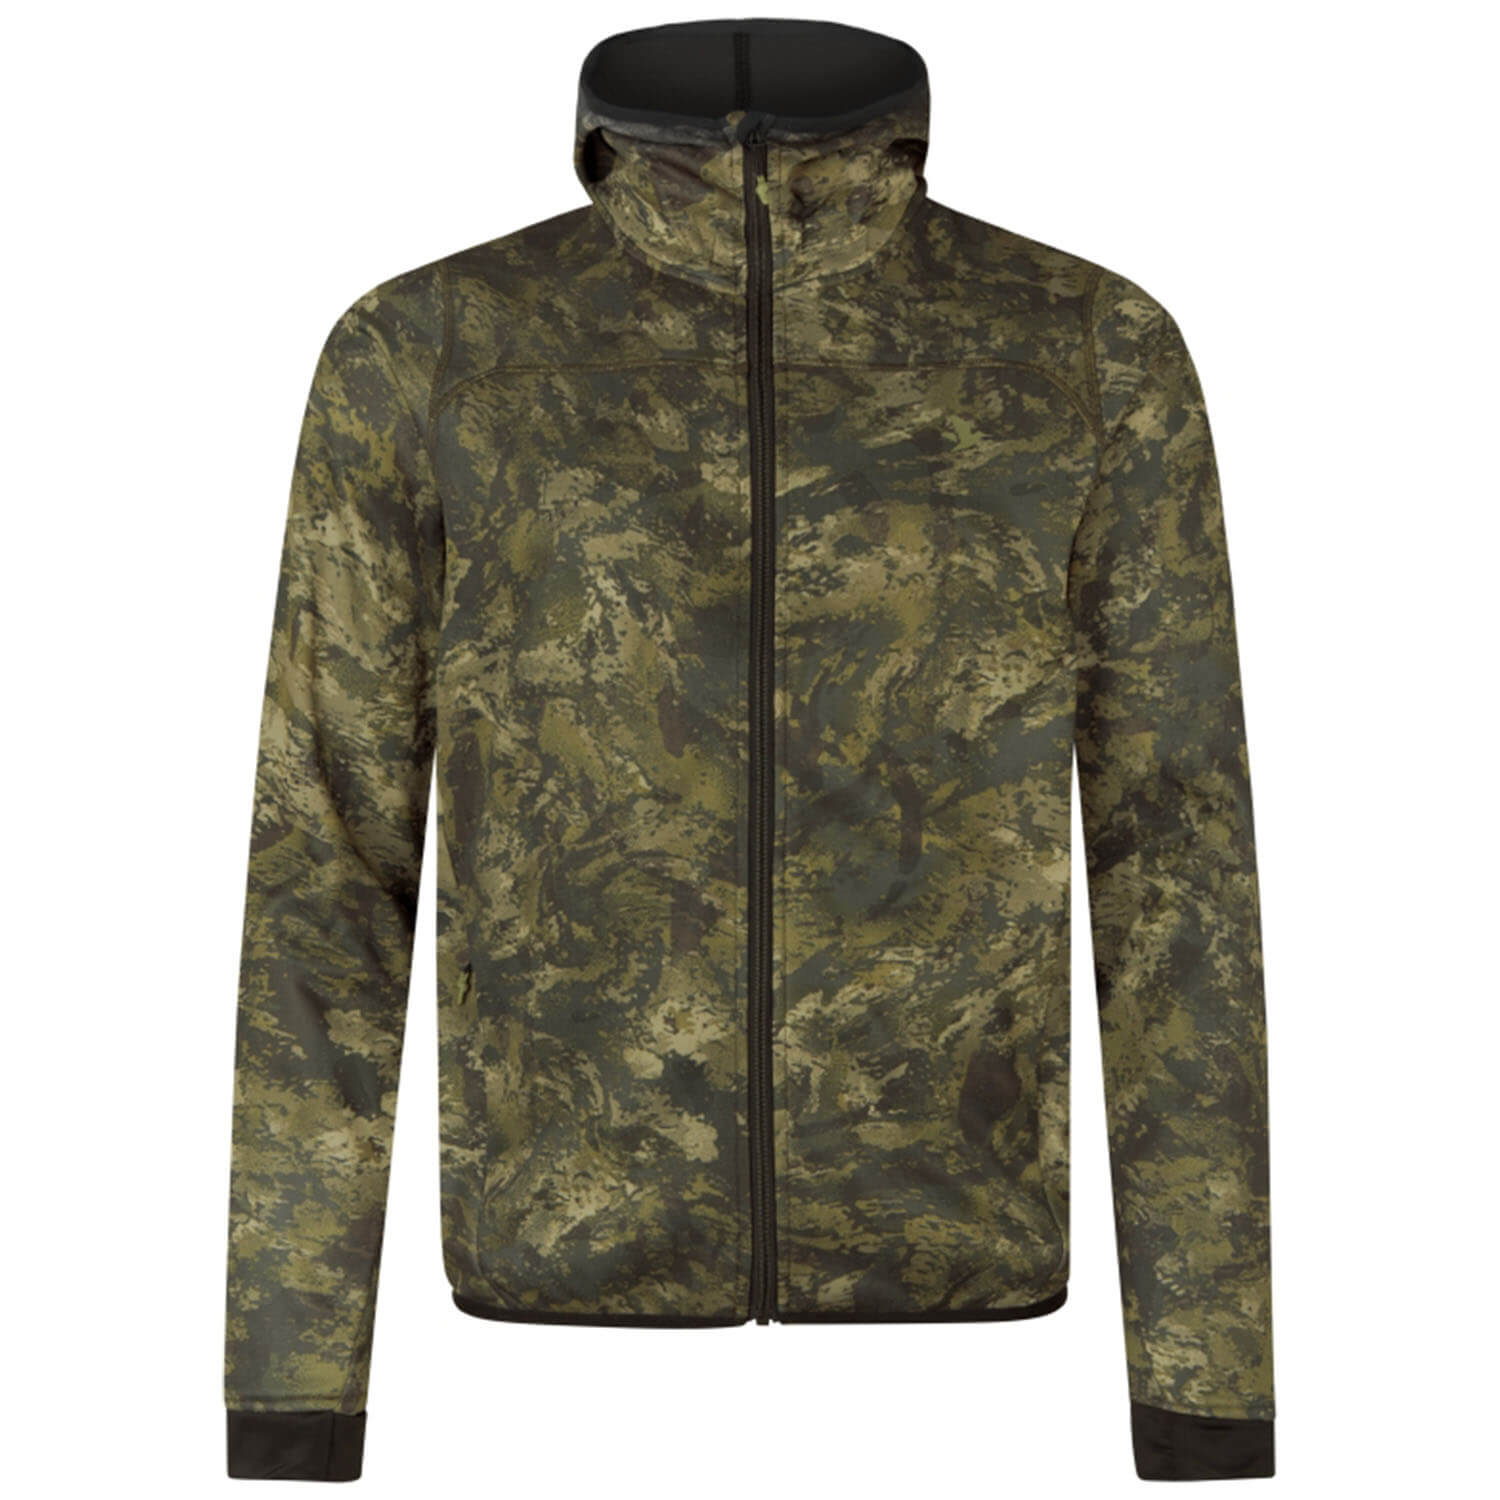 Seeland fleece jacket power camo (InVis green) - Hunting Jackets